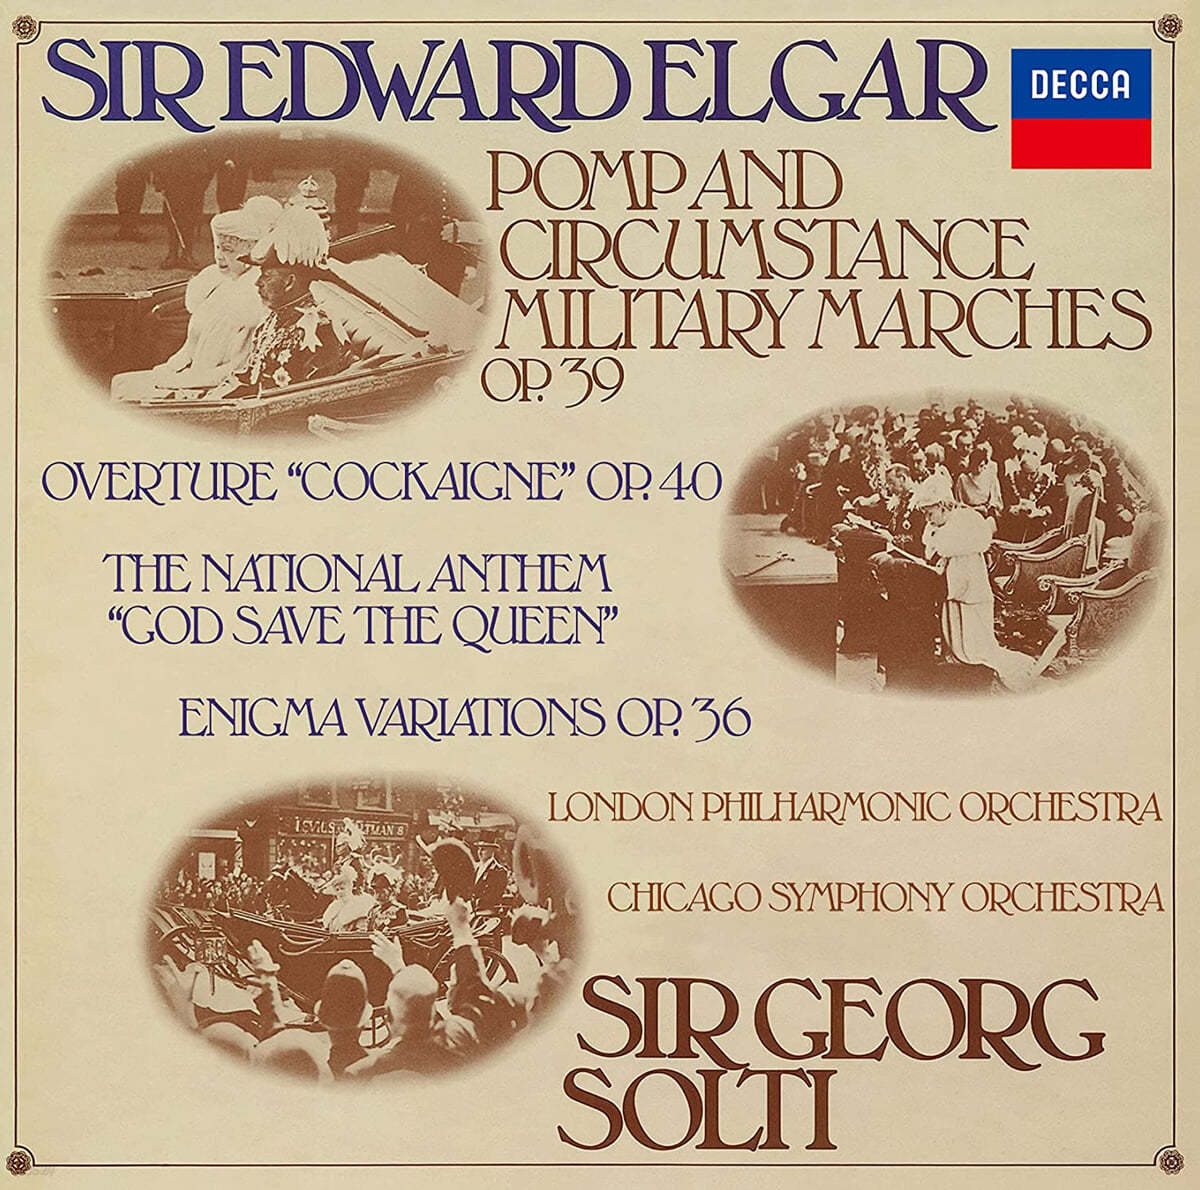 Georg Solti 엘가: 위풍당당 행진곡, 수수께끼 변주곡 (Elgar: Pomp and Circumstance marches, Enigma Variations)